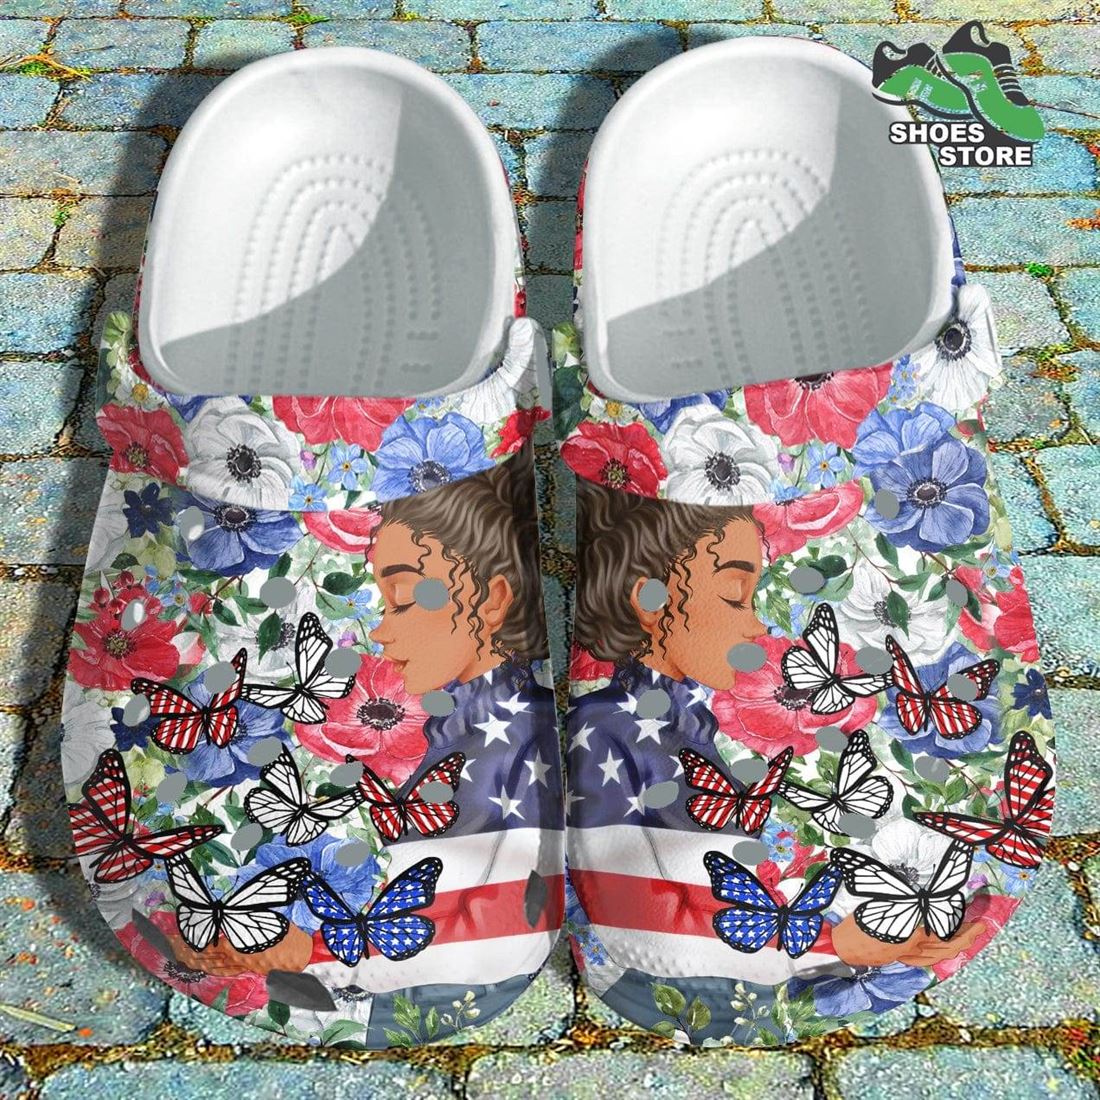 Butterfly Black Magic Girl th Of July Shoes Flowers Garden Butterflies America Flag Crocs